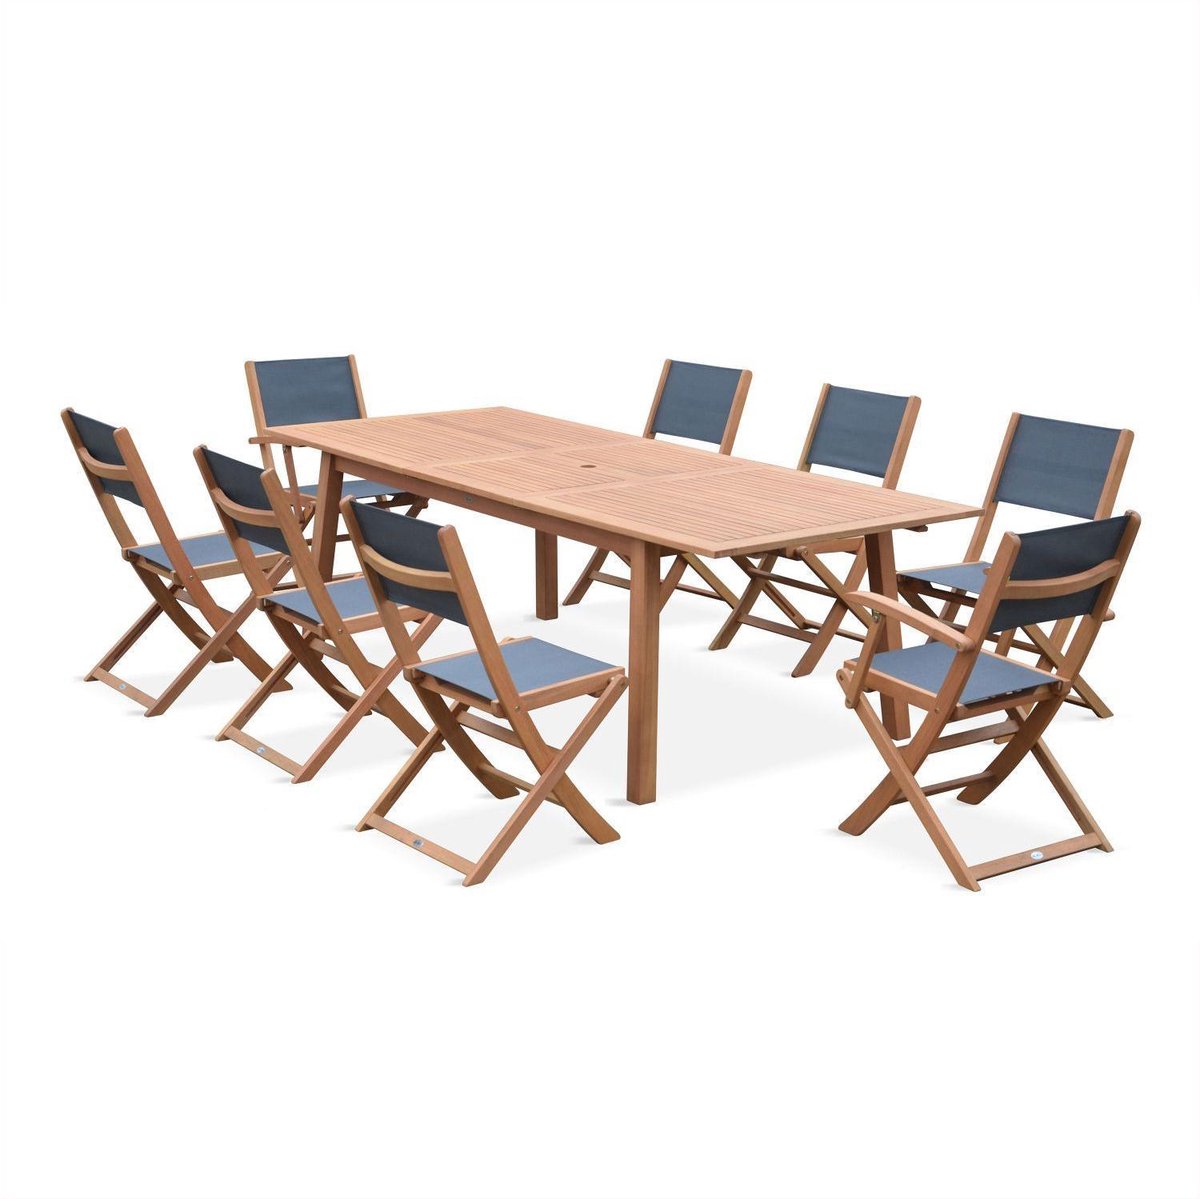 sweeek - Almeria houten tuinset, grote rechthoekige tafel 180-240cm, 2 fauteuils, 6 eucalyptus en textilene stoelen